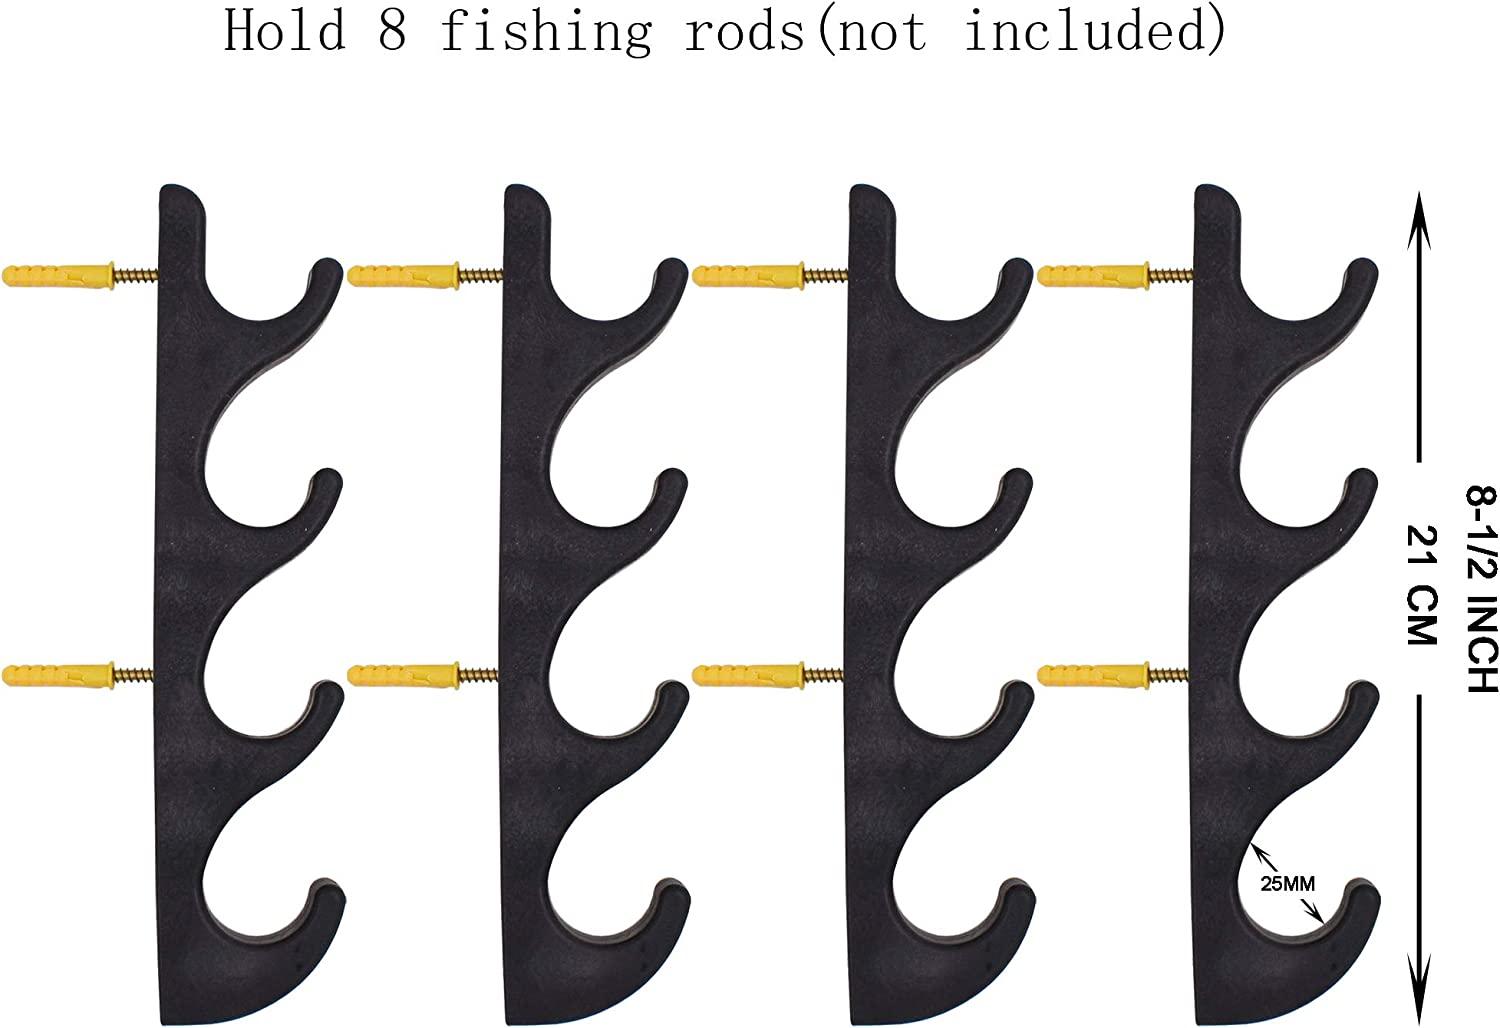 YYST Horizontal Fishing Rod Storage Rack Holder Wall Mount W Screws - No Fishing  Rod- to Hold 8 Fishing Rods